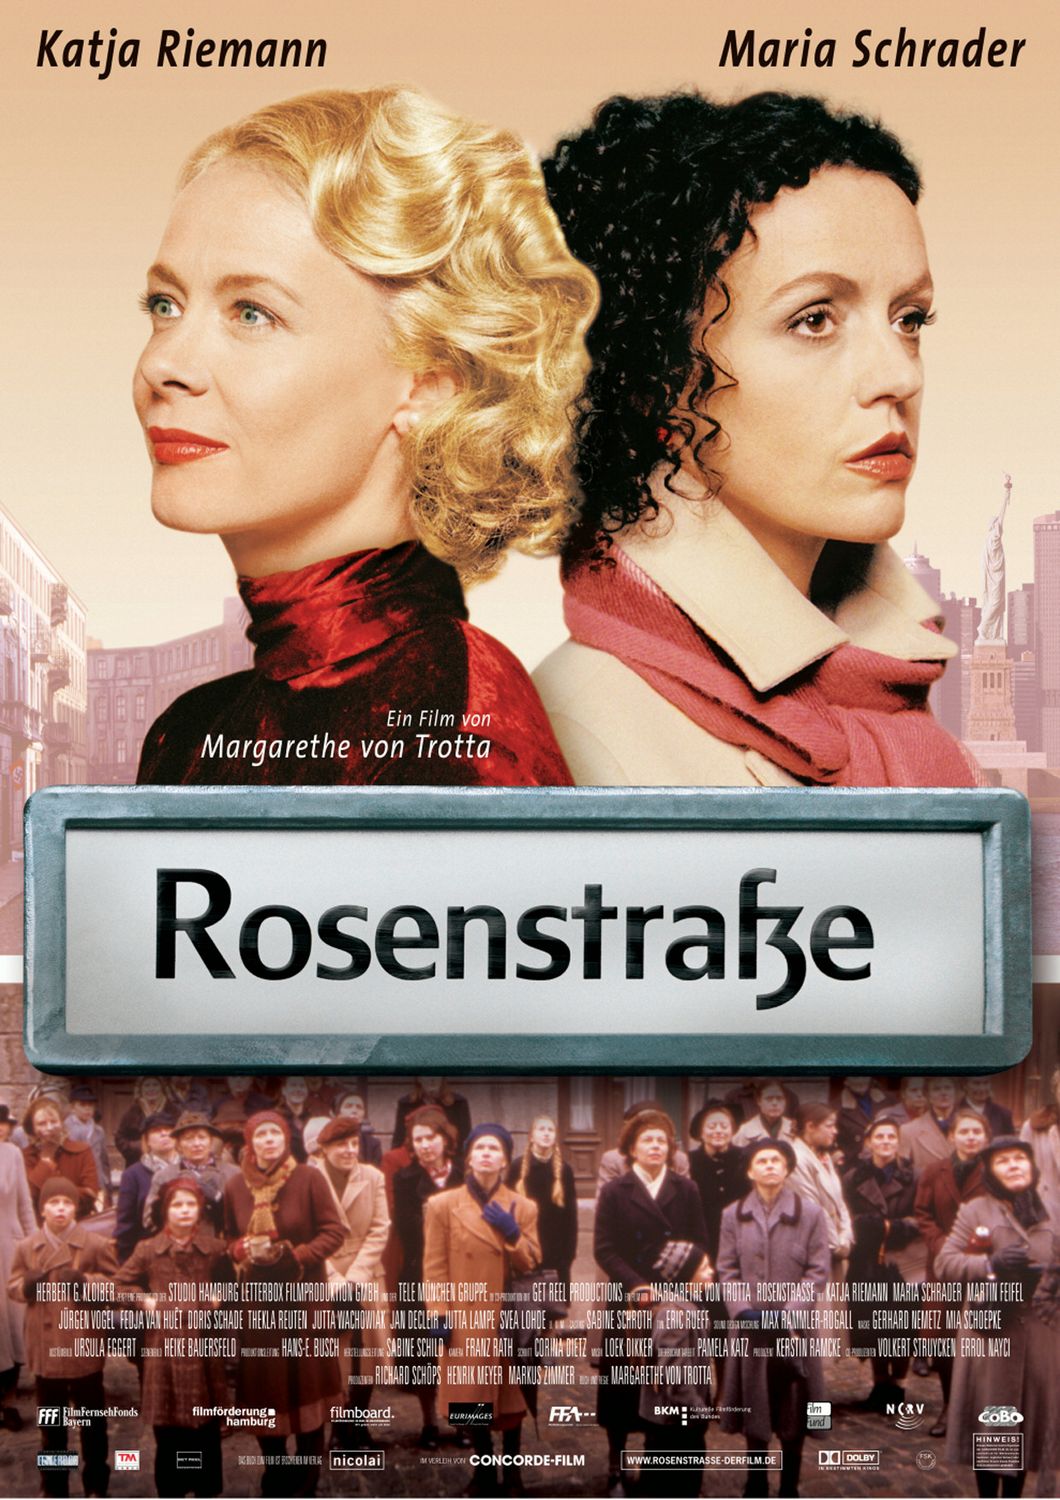 Extra Large Movie Poster Image for Rosenstrasse 